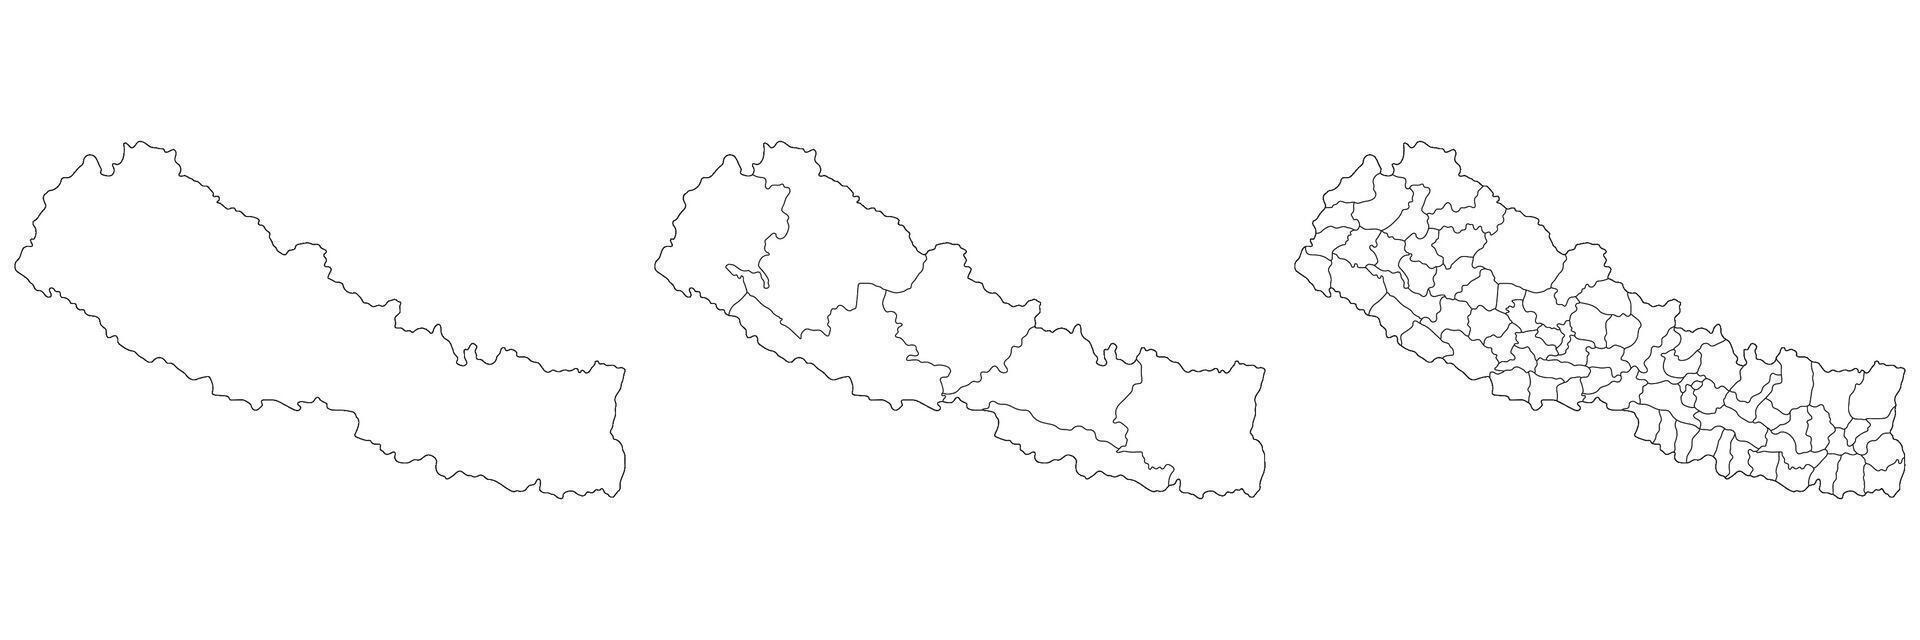 Nepal carta geografica. carta geografica di Nepal nel bianca impostato vettore